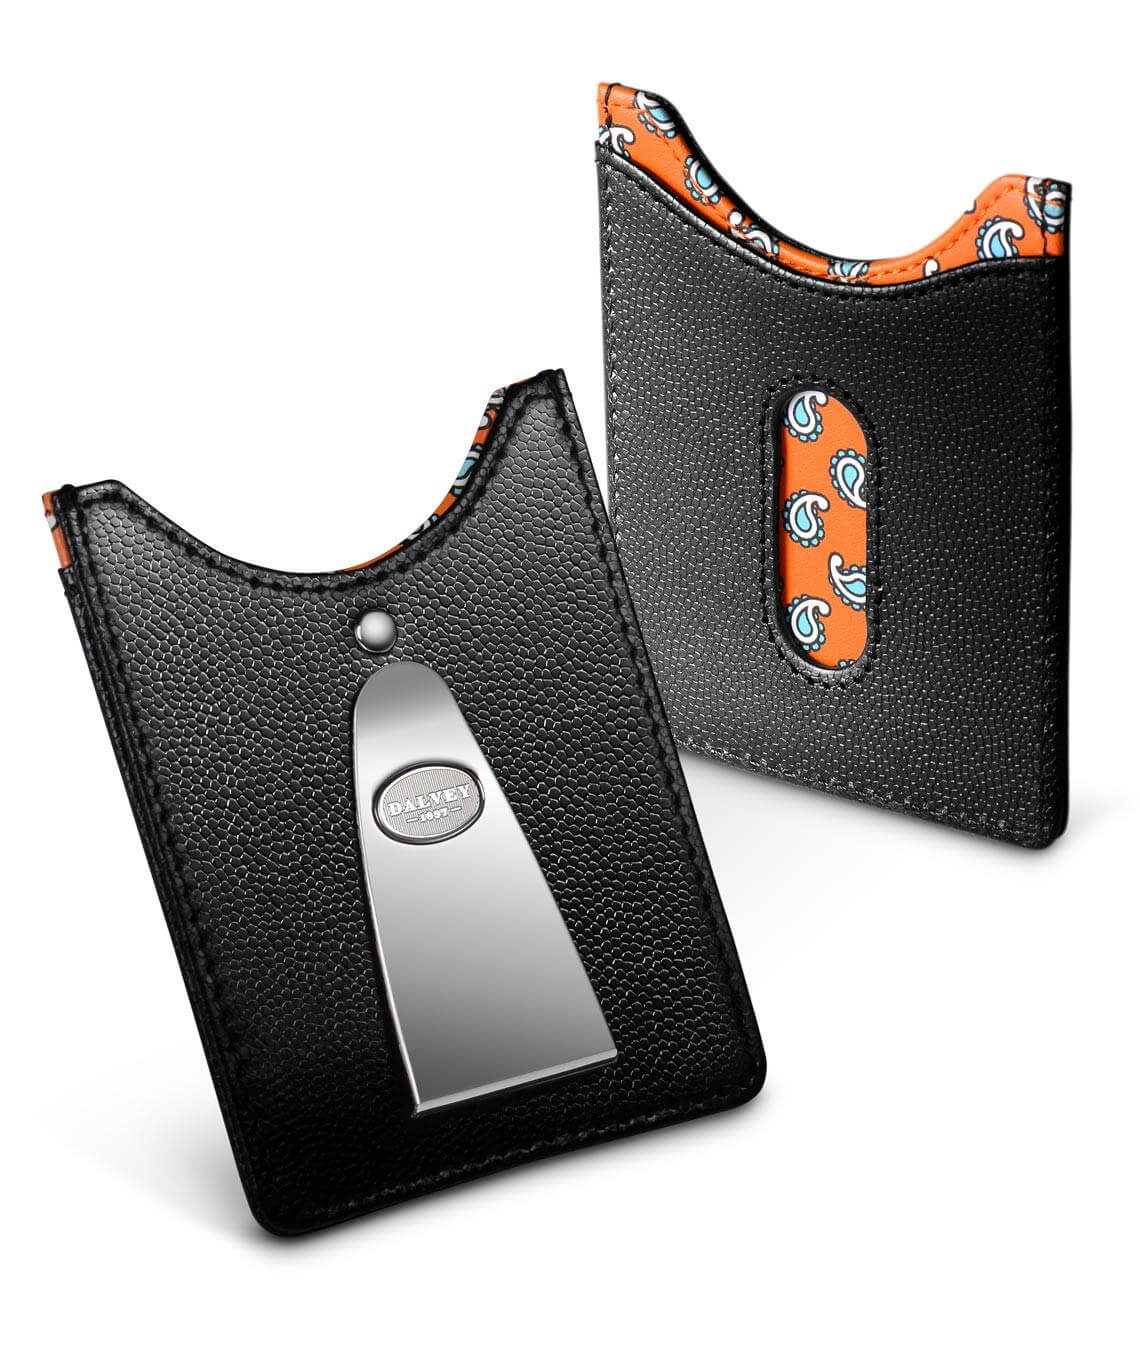 Access Credit Card & Money Clip - Black / Orange Paisley